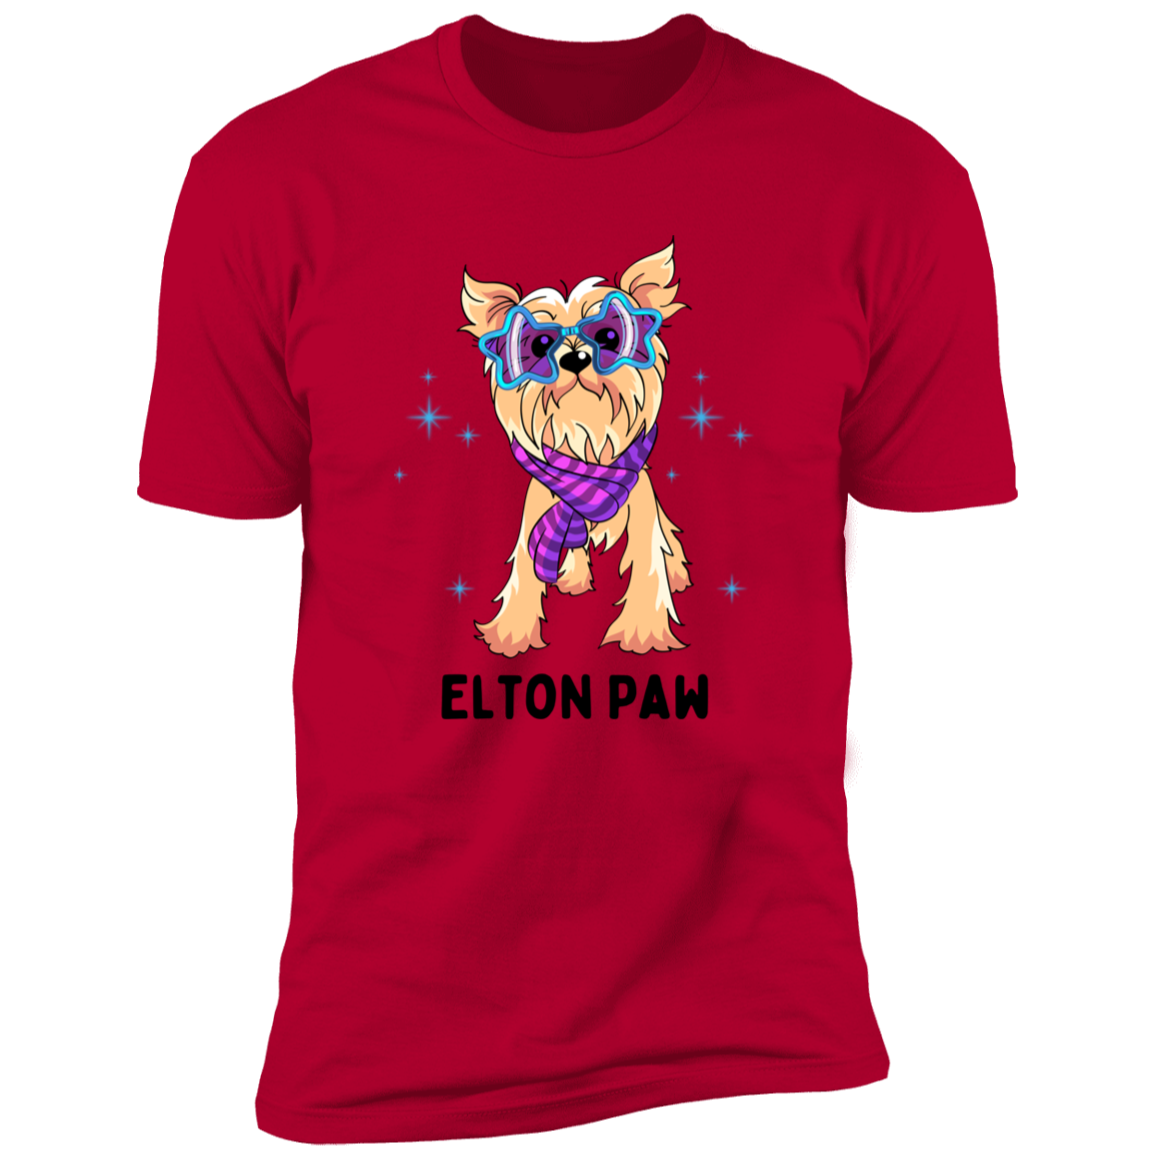 Elton Paw Dog Shirt, Funny dog shirt for humans, Dog mom shirt, dog dad shirt, in red